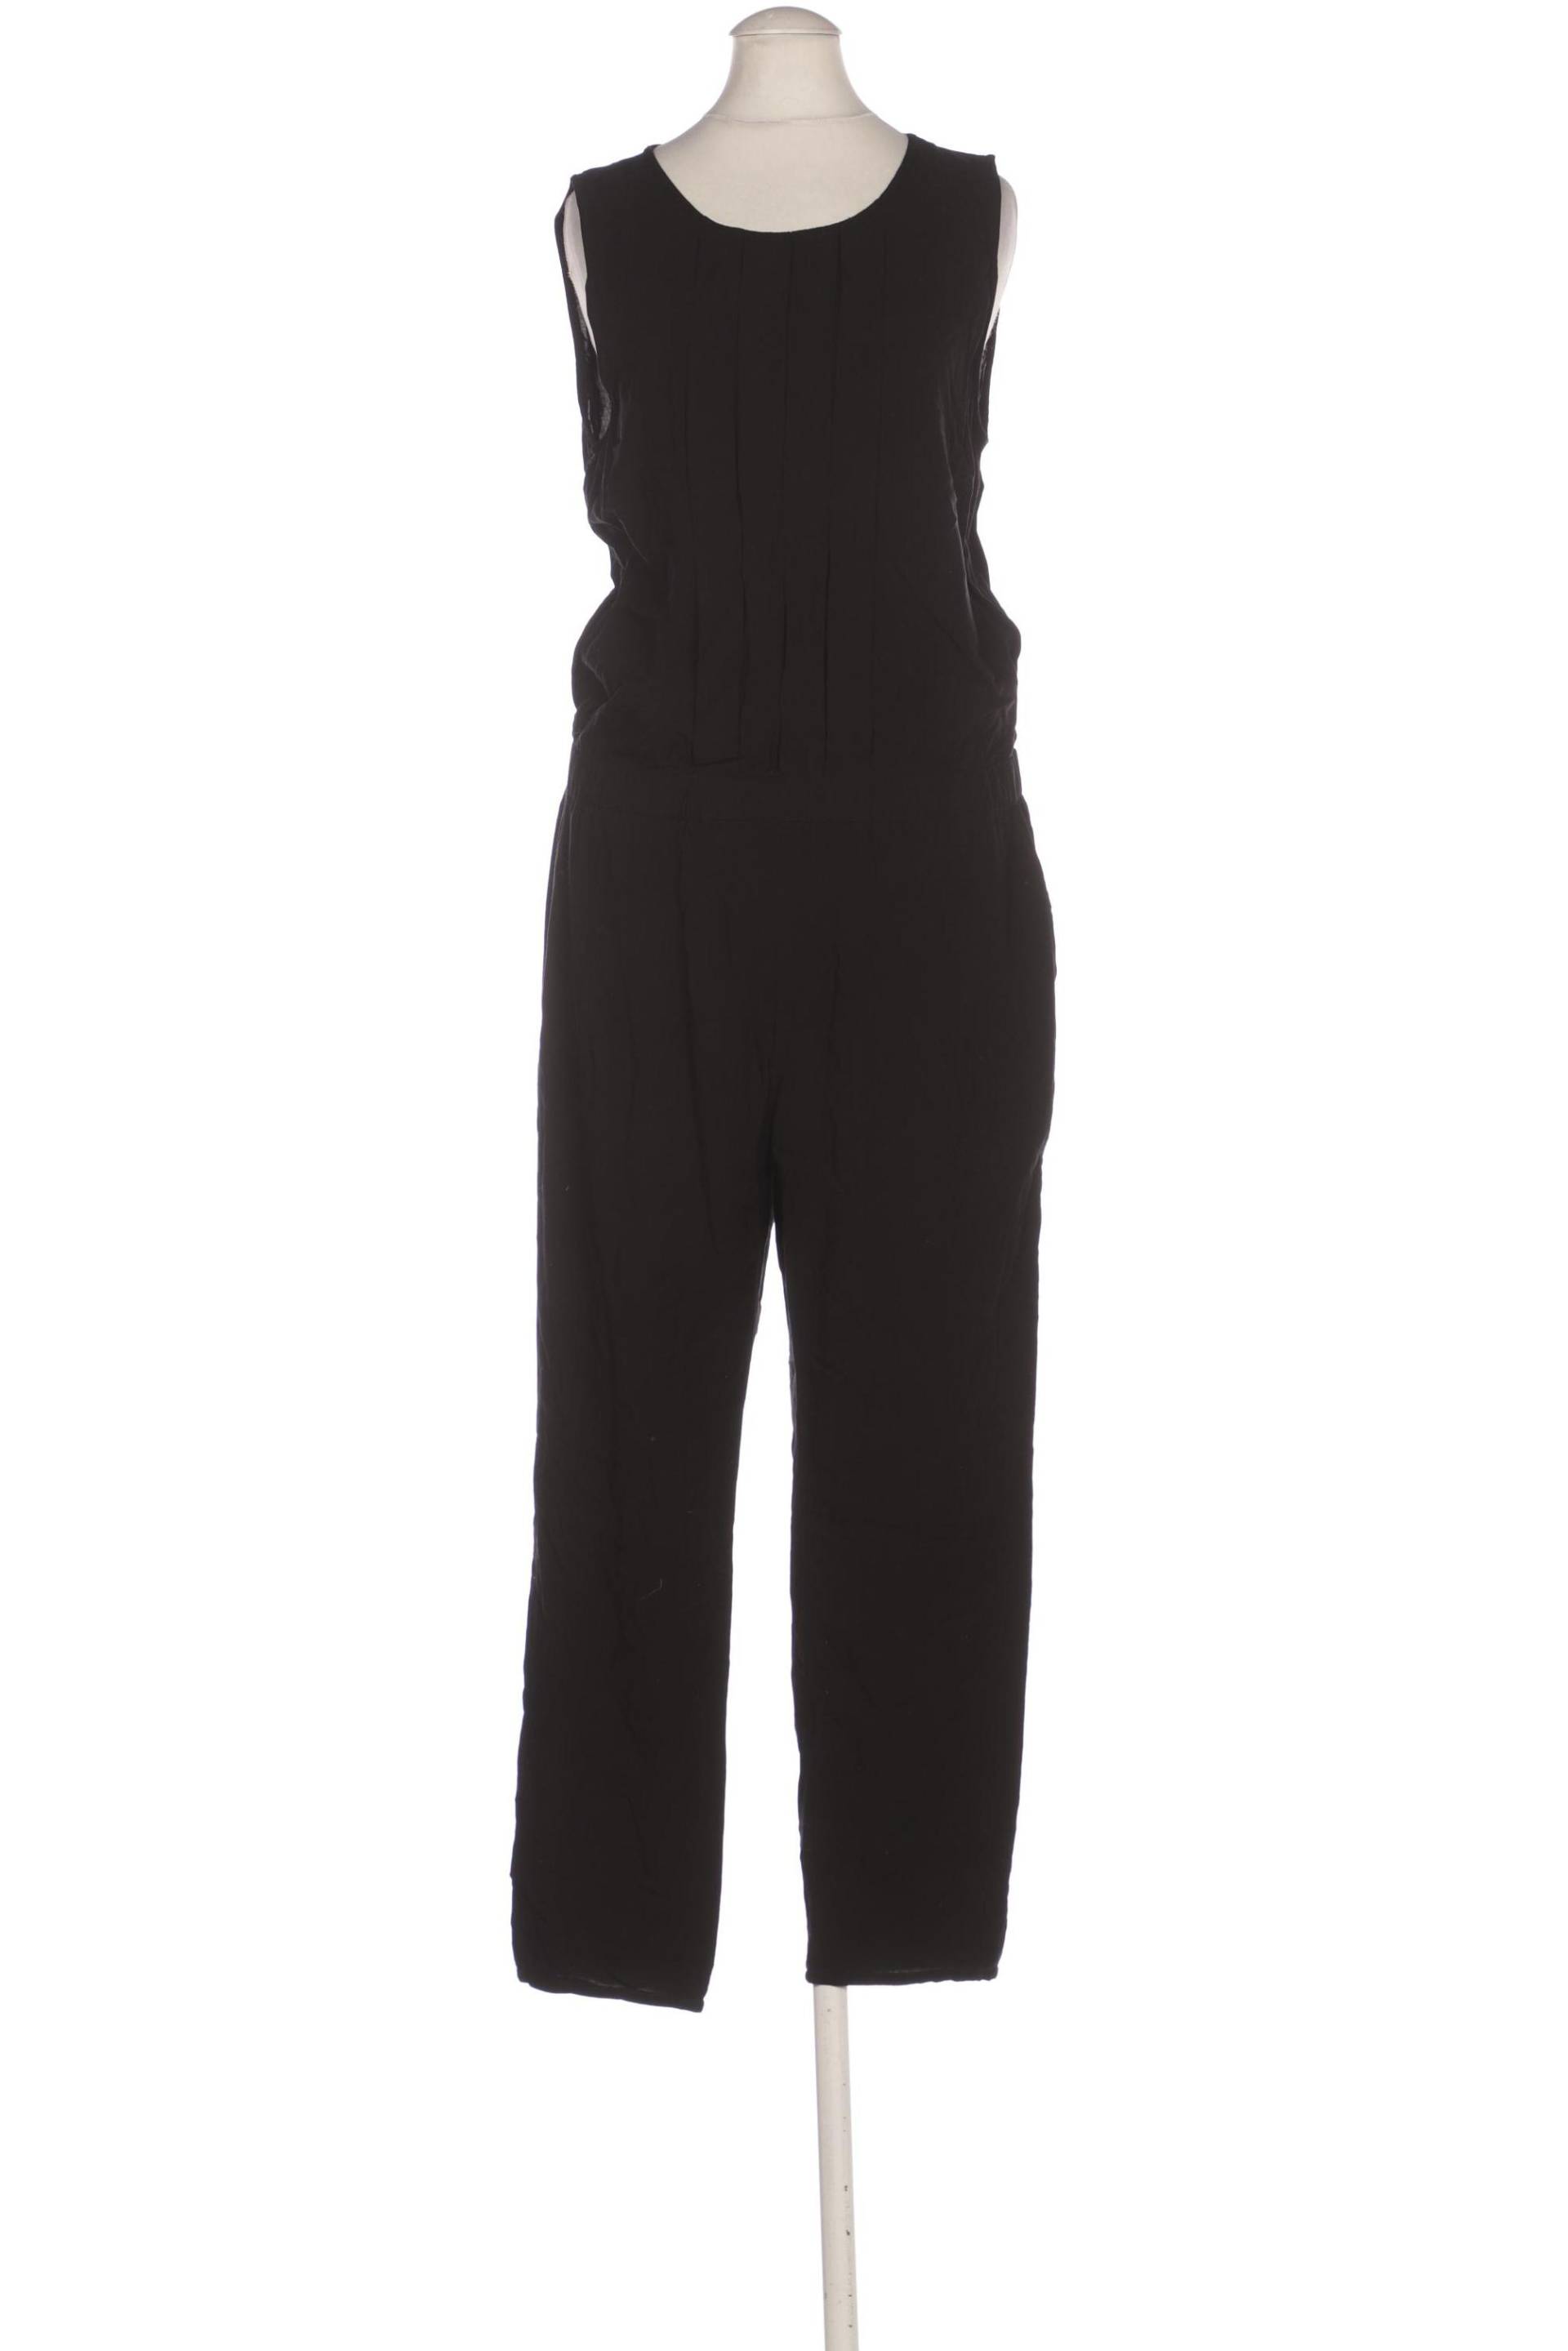 Soaked in Luxury Damen Jumpsuit/Overall, schwarz, Gr. 36 von Soaked in Luxury